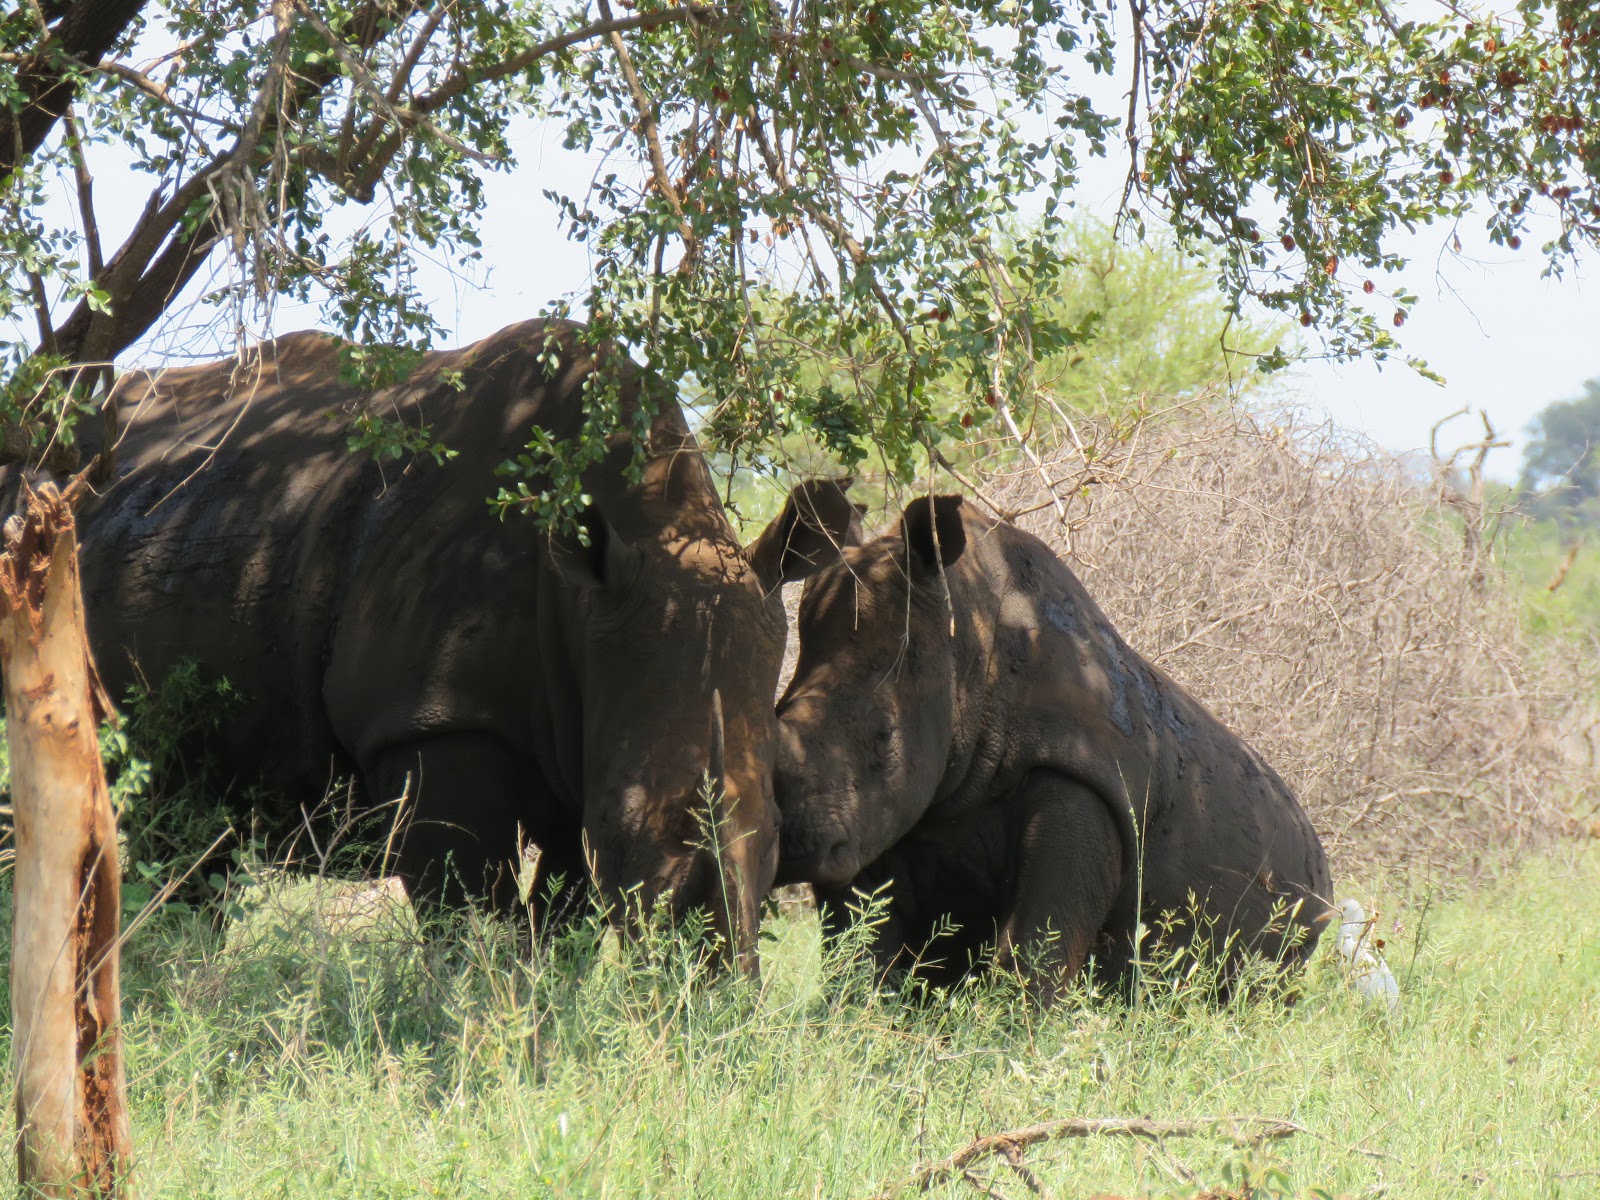 wildlife photographer in Kruger National Park, South Africa